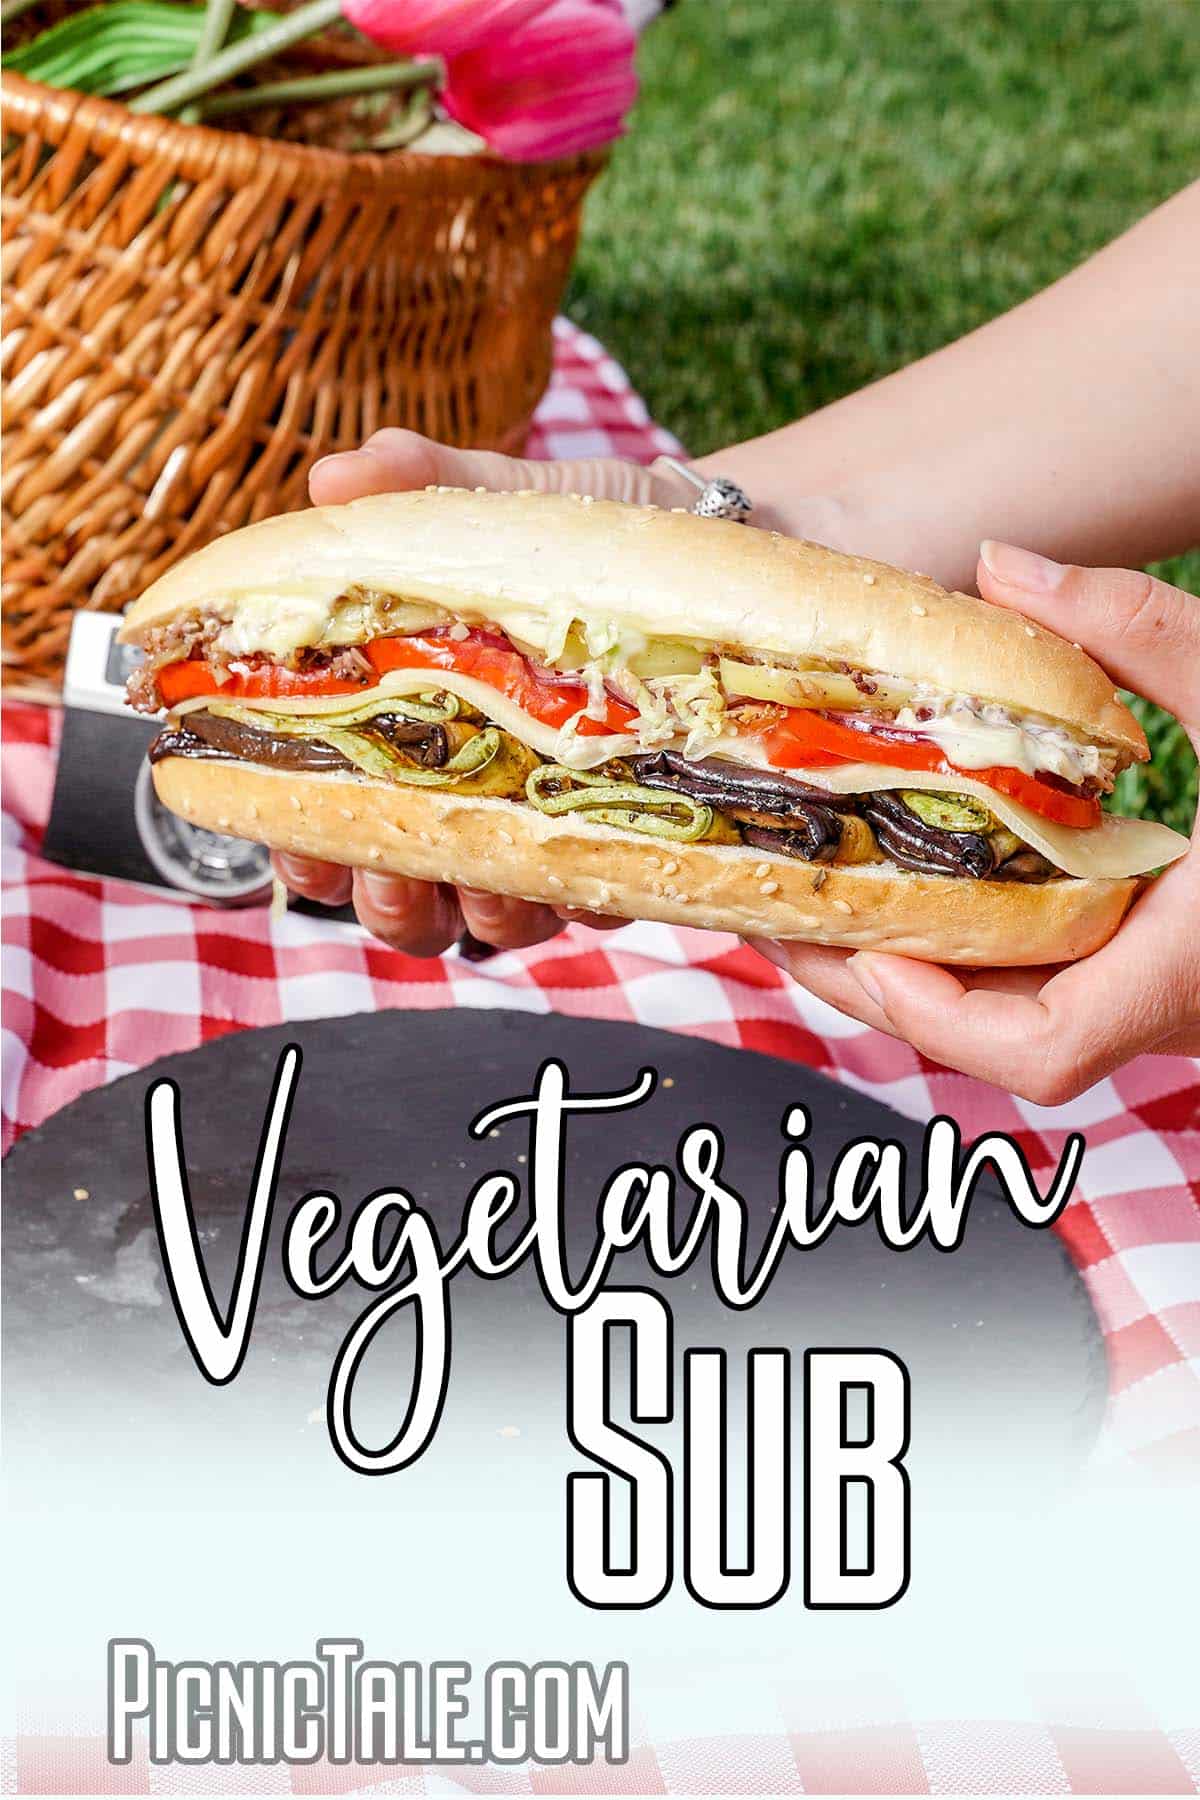 Holding Vegetarian sub outside at picnic.